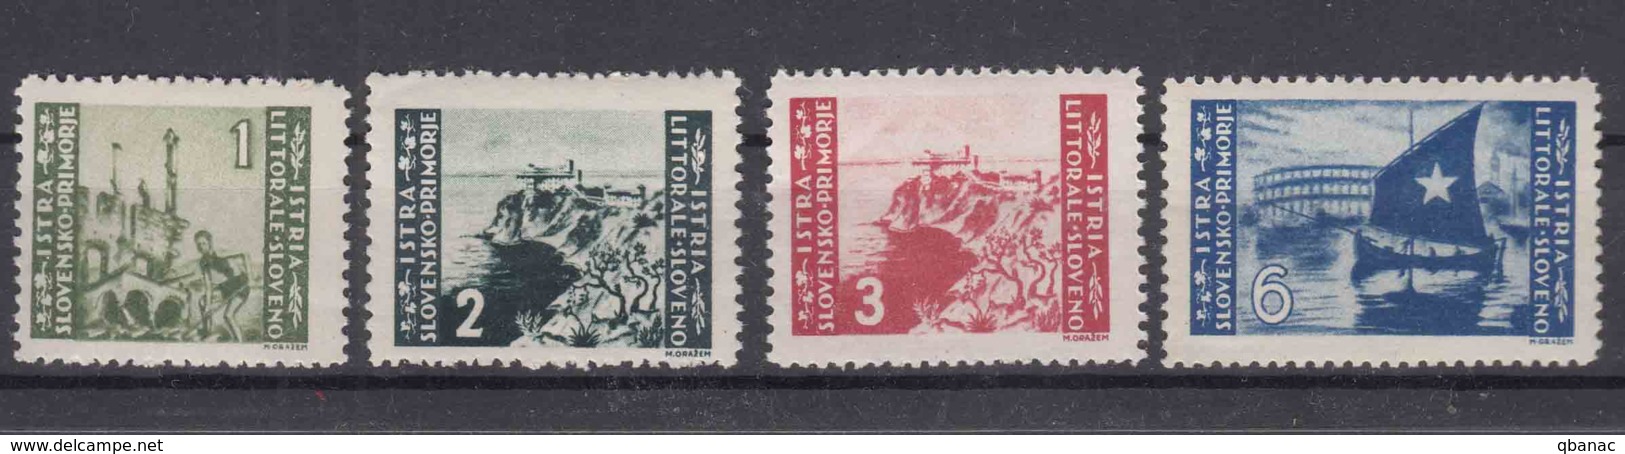 Istria Litorale Yugoslavia Occupation, 1946 Sassone#63-66 Complete Set, Mint Never Hinged - Yugoslavian Occ.: Istria